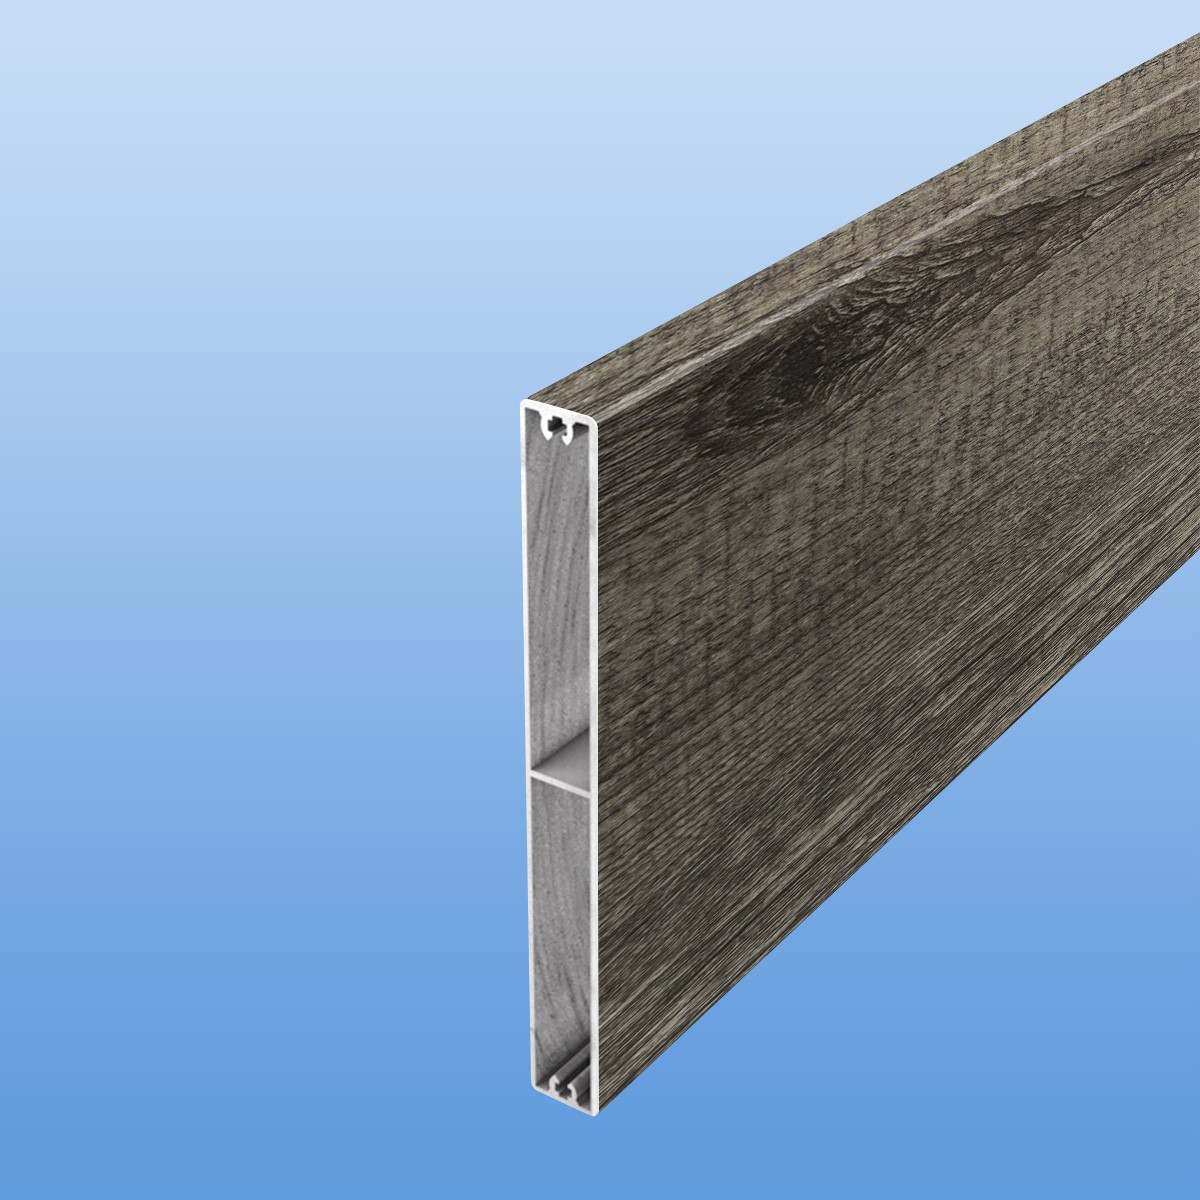 Balkonbretter aus Aluminium 150 mm breit in Holzoptik "Treibholz"